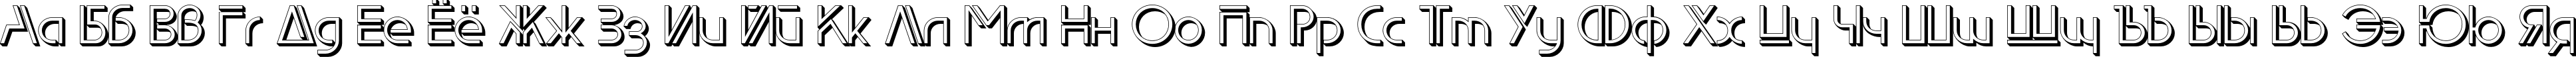 Пример написания русского алфавита шрифтом EdgeLineShadow